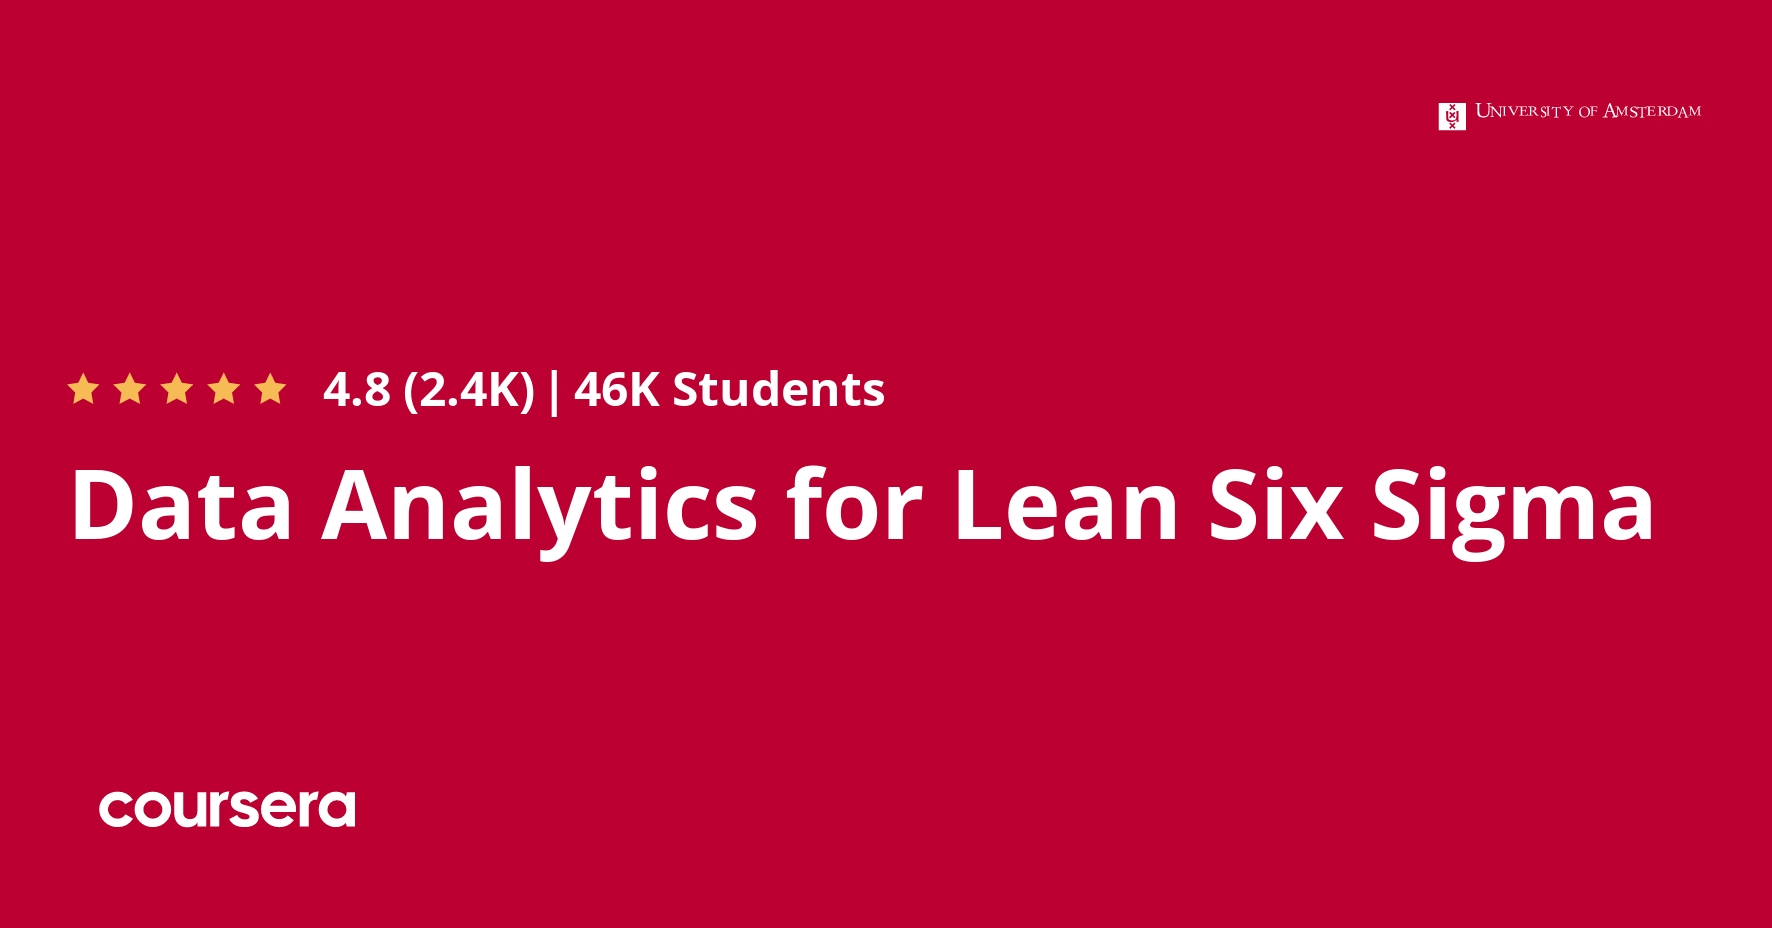 Data Analytics for Lean Six Sigma